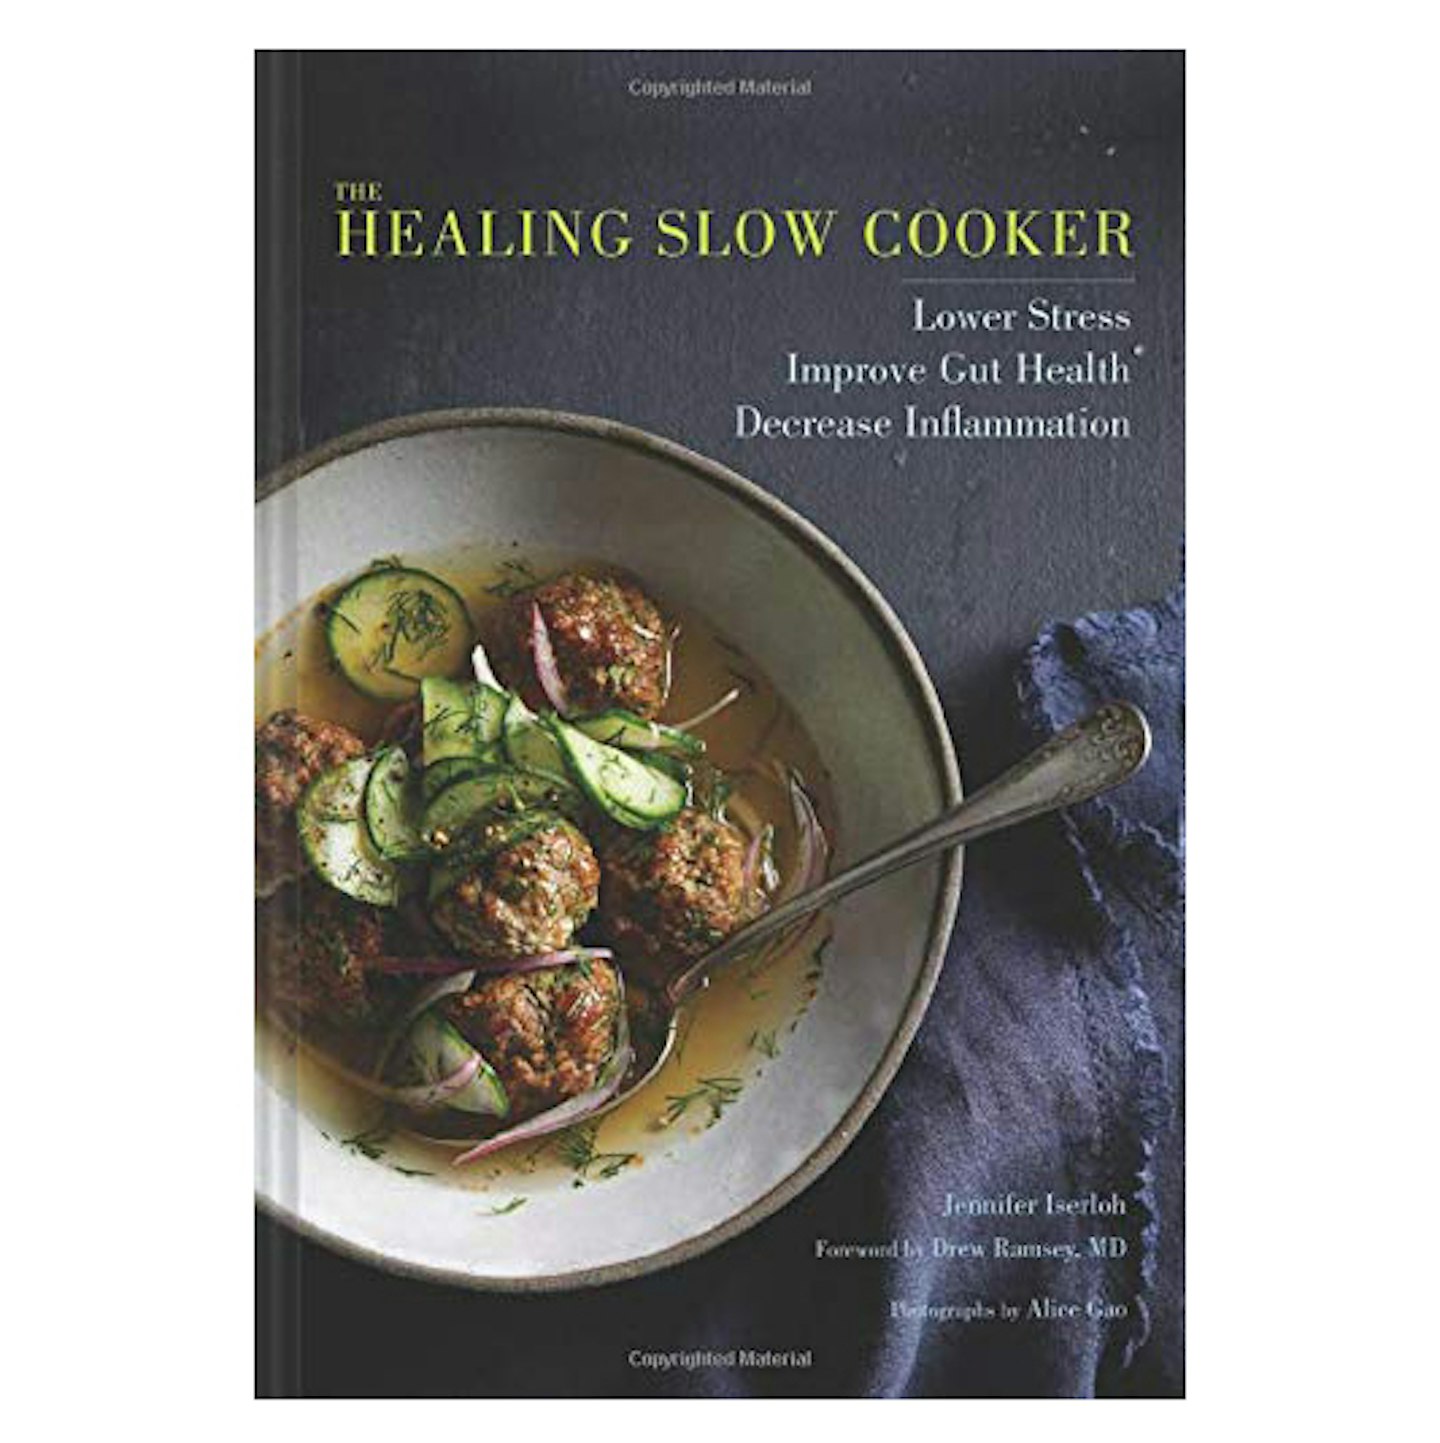 The Healing Slow Cooker by Jennifer Iserloh